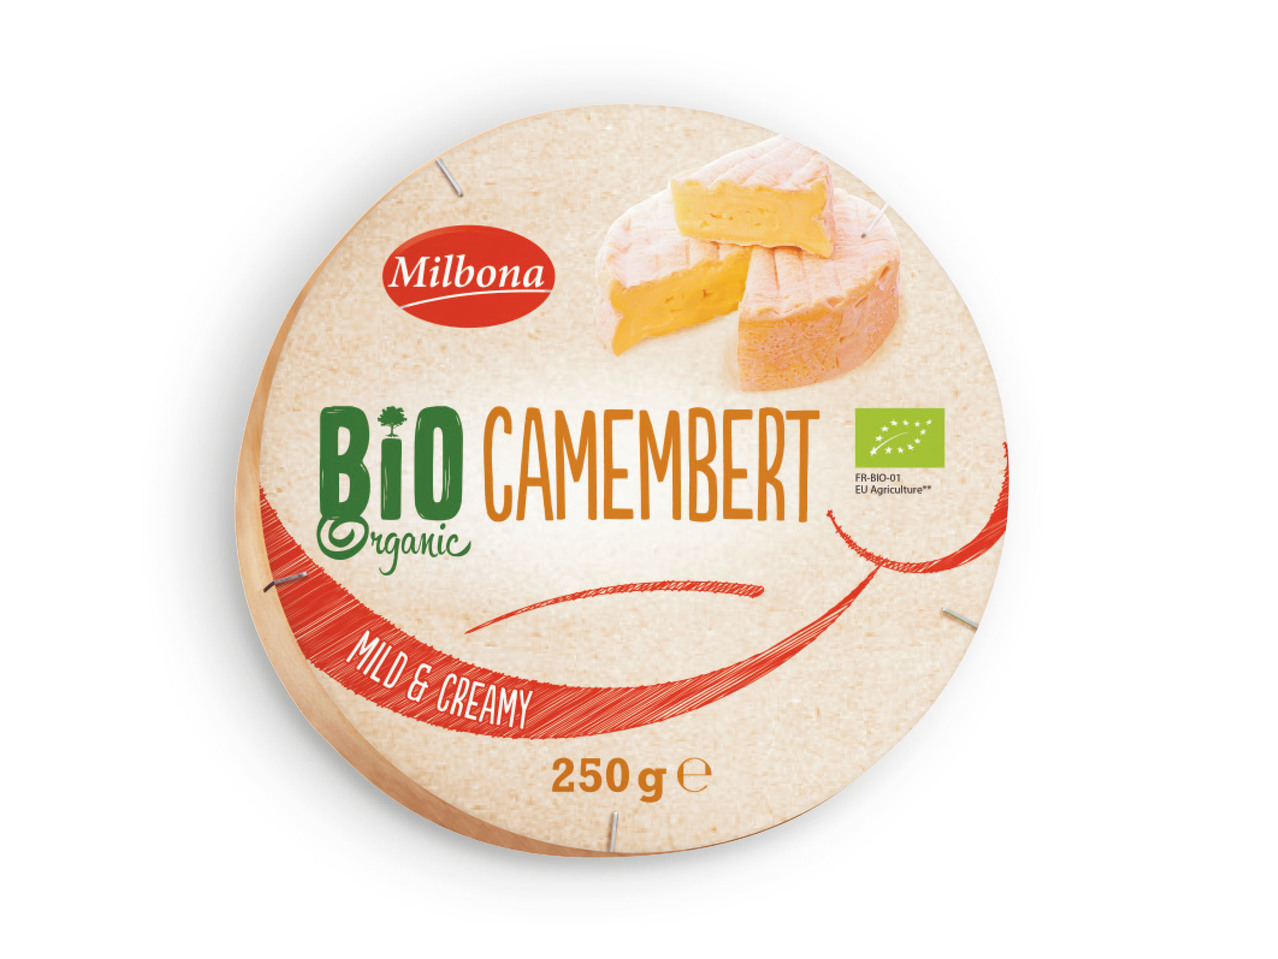 MILBONA(R) Camembert Bio